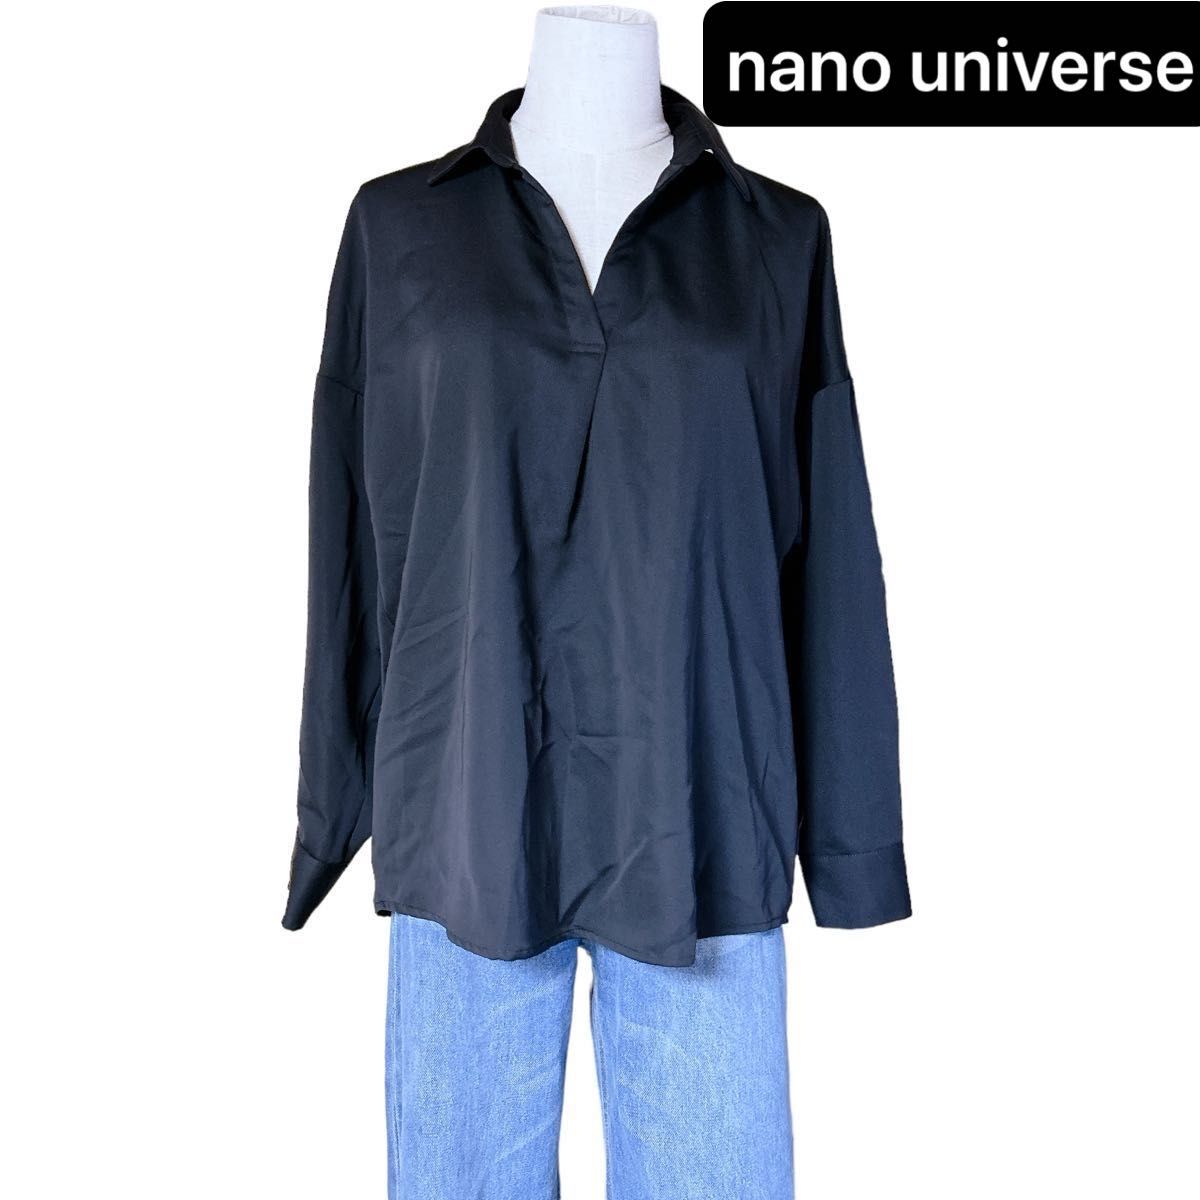 pm426.6 nano universe ナノユニバース スキッパーシャツ とろみ ブラック 黒 長袖 ブラウス オープンカラー